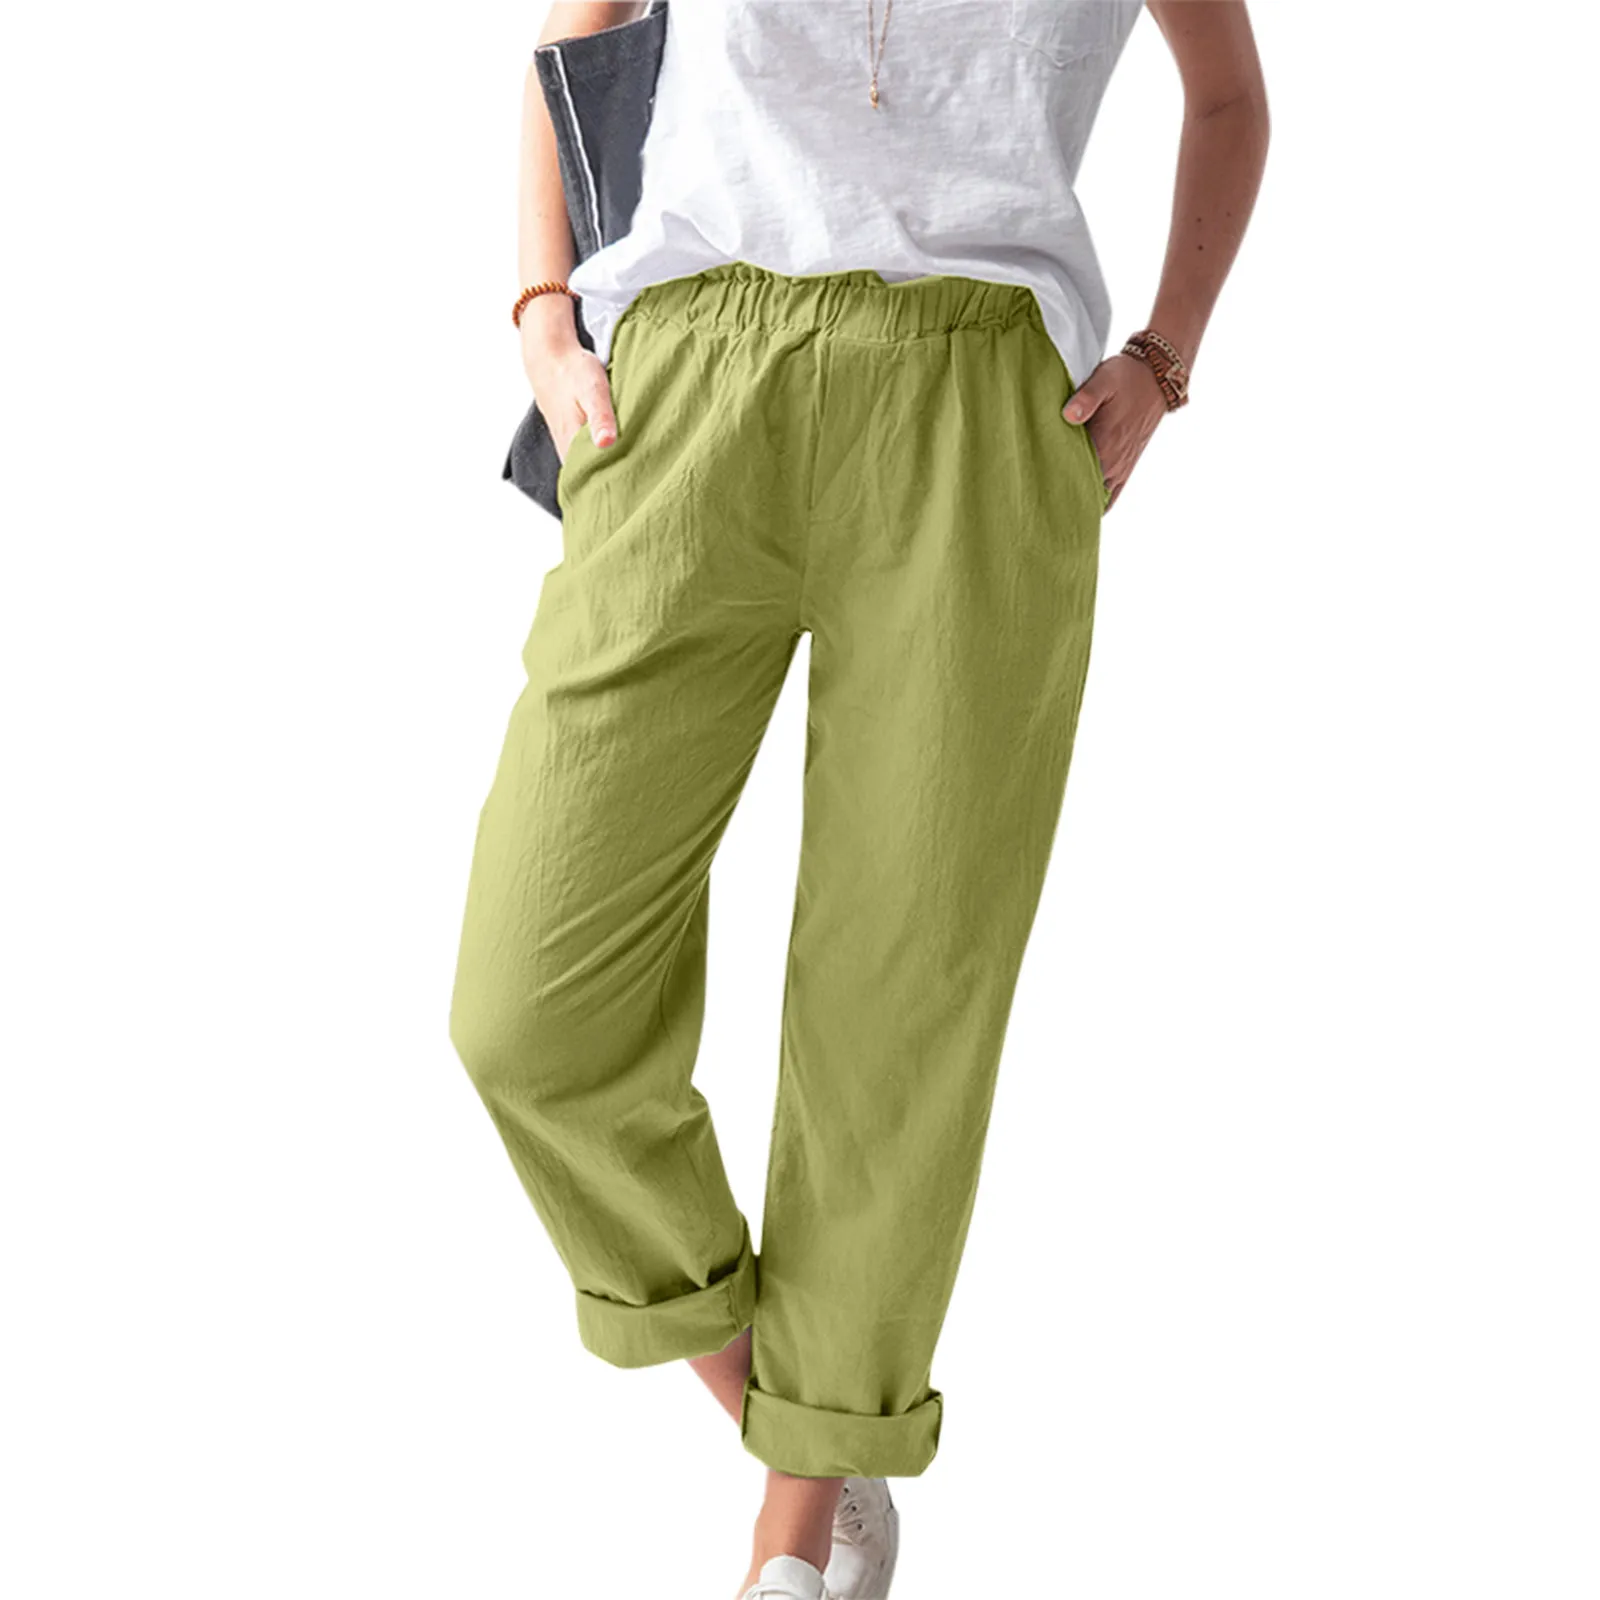 Trousers Casual Pocket Tightness Women Harem Pants Cotton Linen Solid Clothes Pants Candy Colors Straight Leg Pants For Female